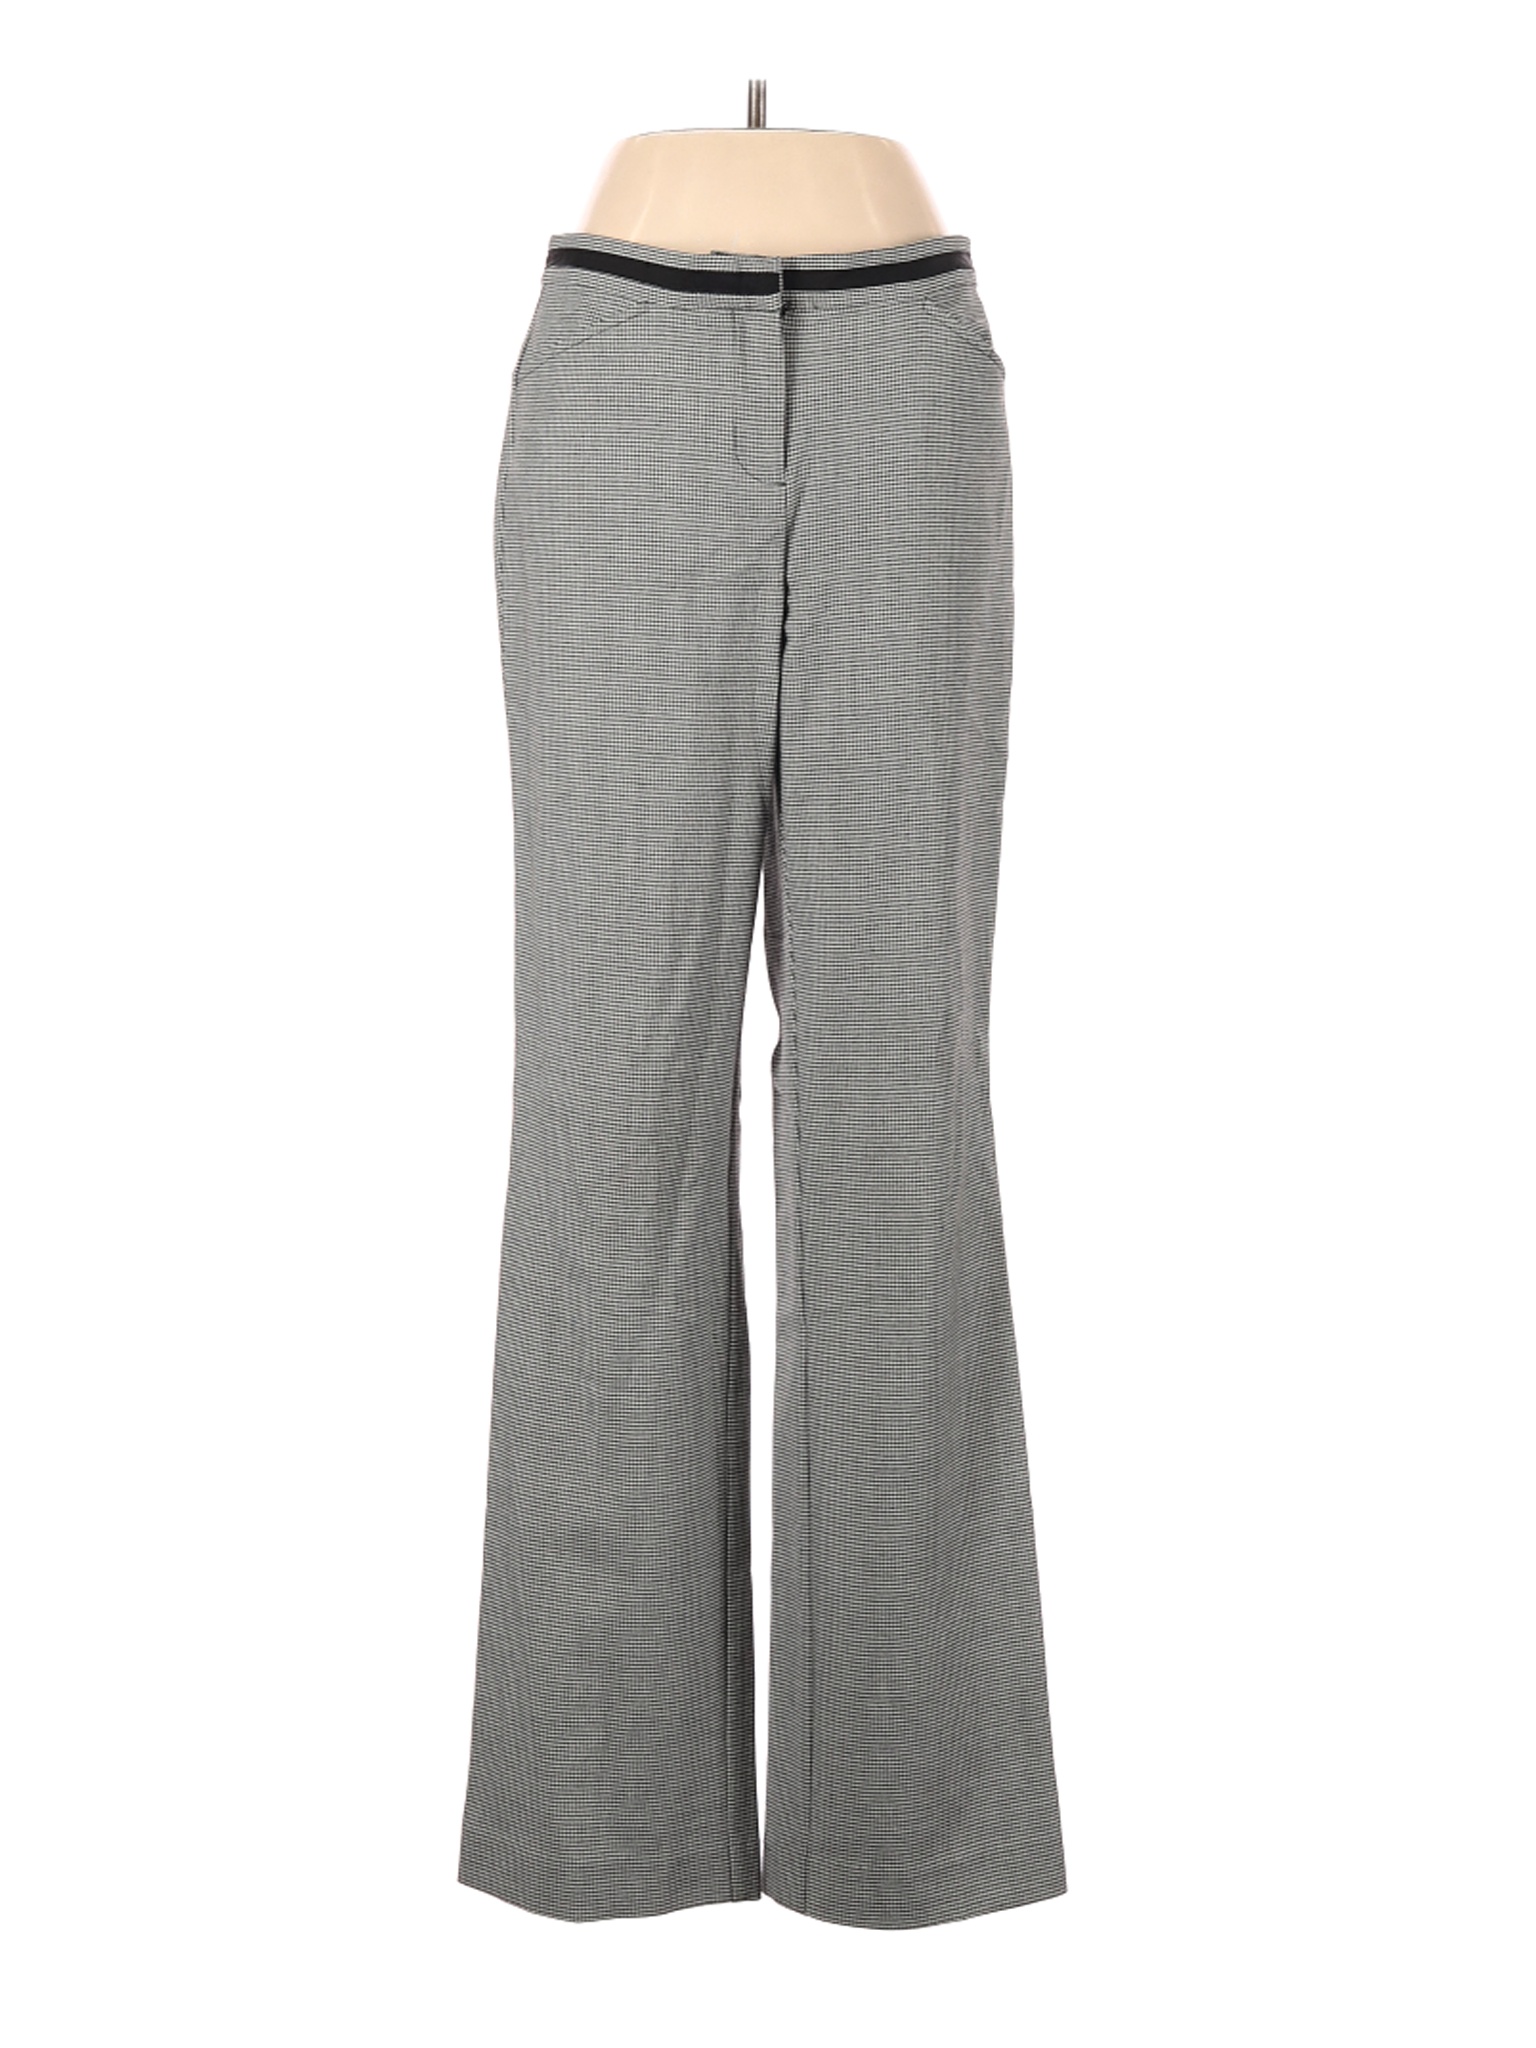 Liz Claiborne Women Gray Dress Pants 4 | eBay